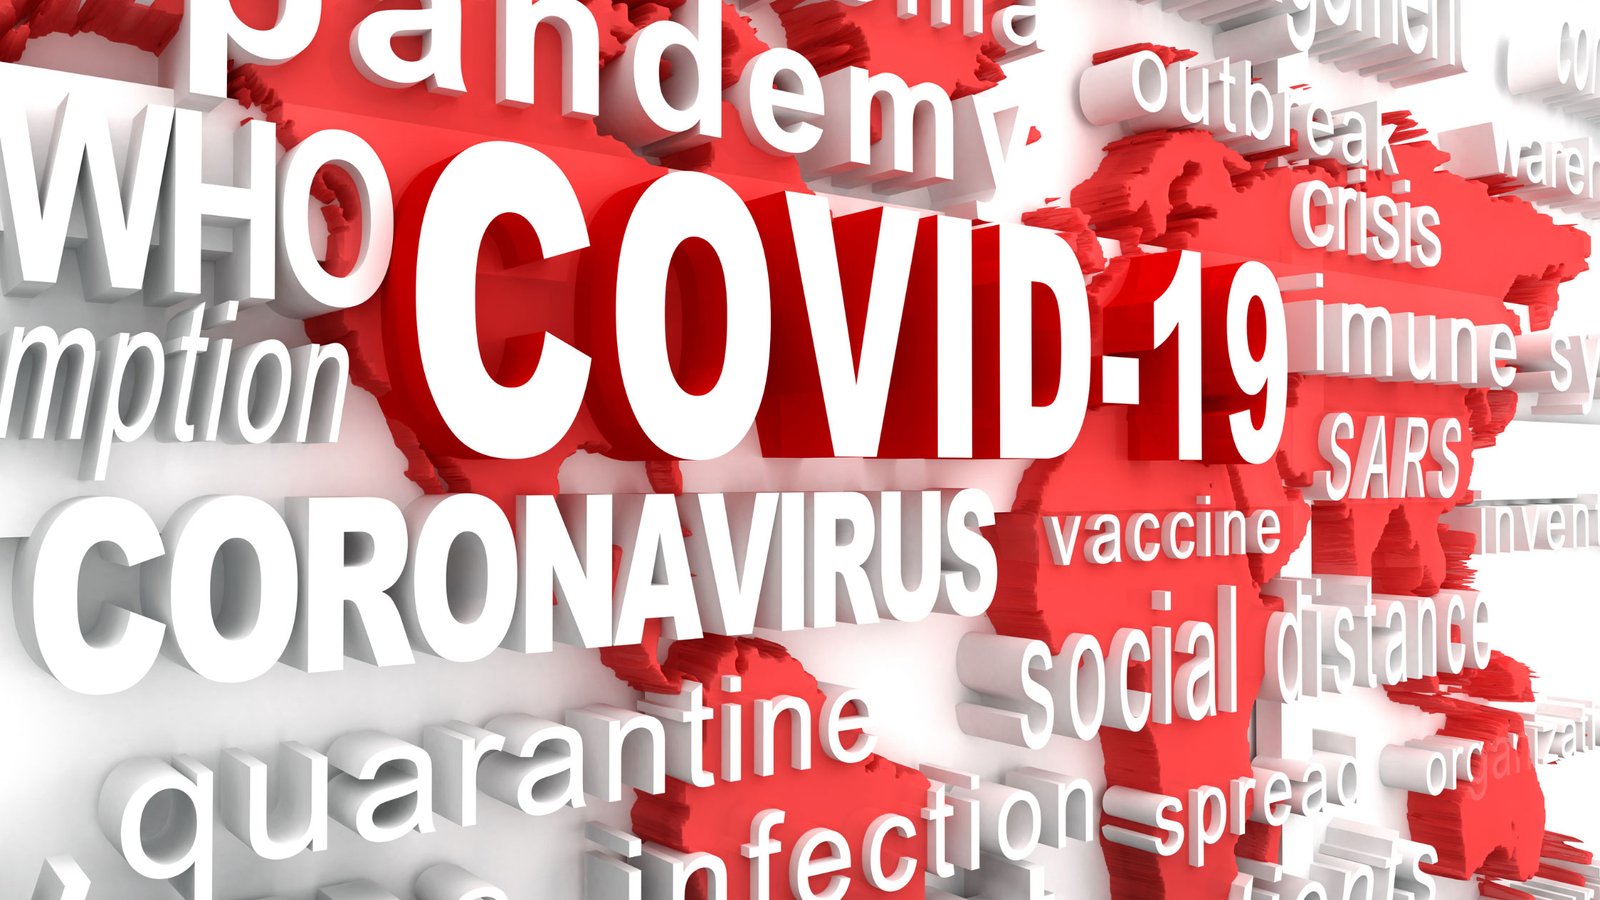 Covid 19, pandemic, quarantin words